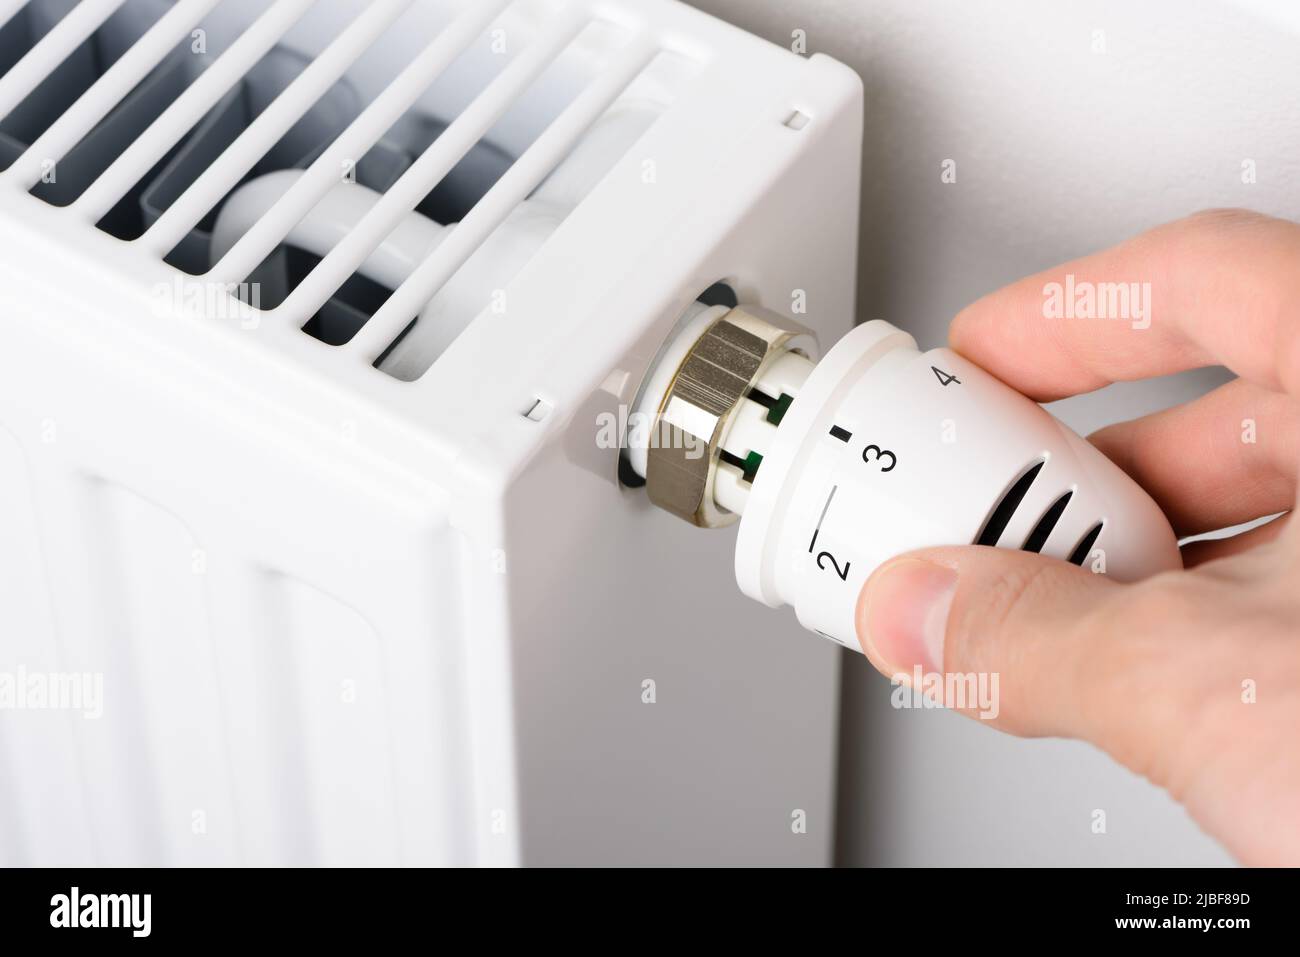 https://c8.alamy.com/comp/2JBF89D/hand-adjusting-the-valve-knob-of-heating-radiator-temperature-thermostat-in-winter-cold-season-2JBF89D.jpg